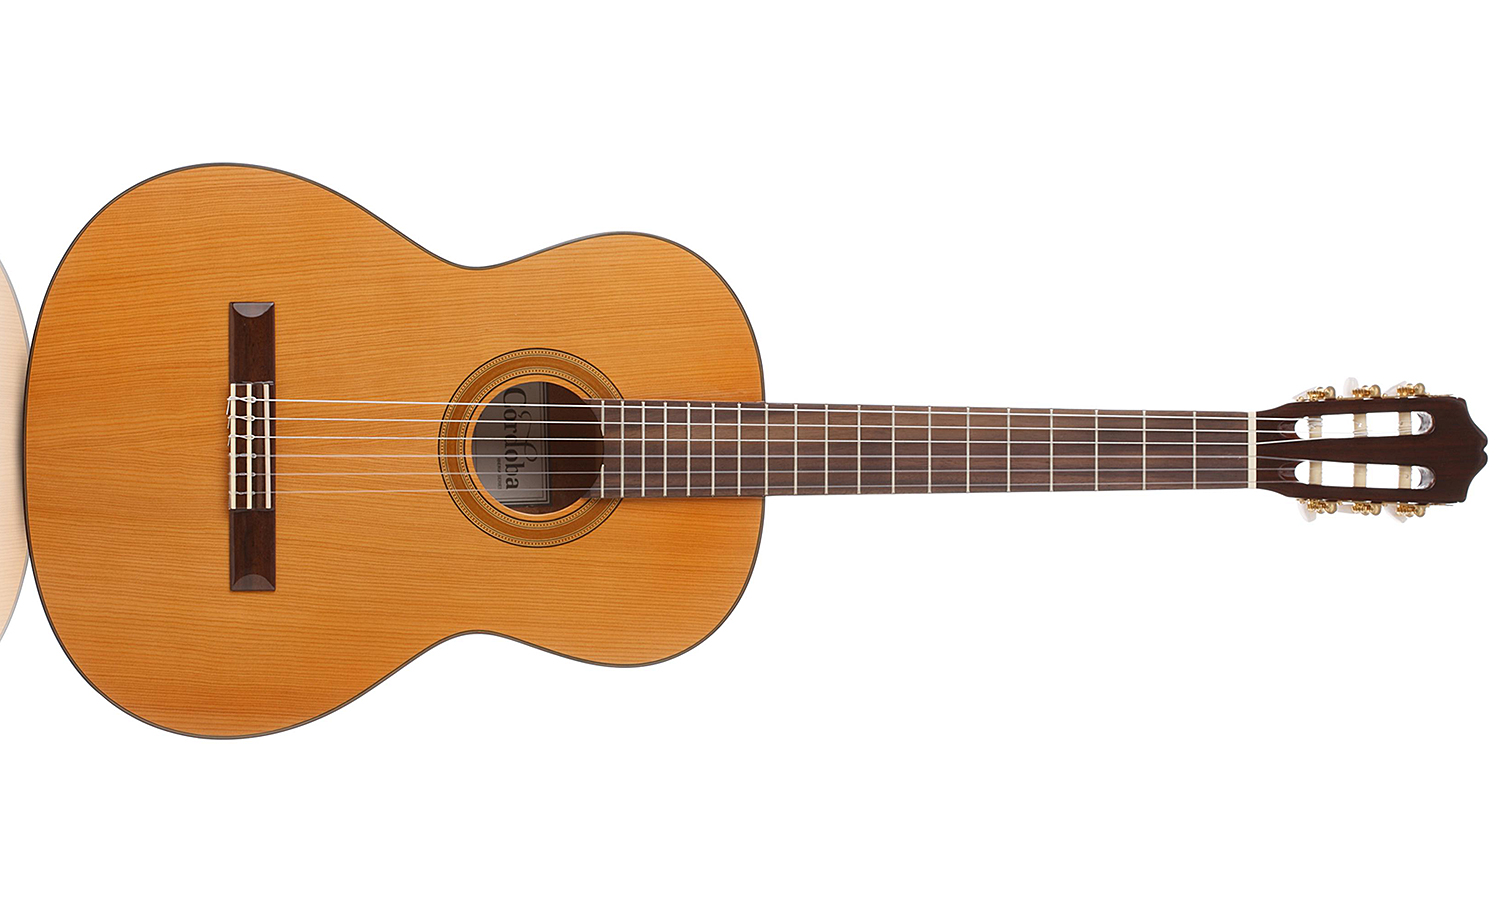 Cordoba Iberia C3m  Mahogany - Natural Cedar - Classical guitar 4/4 size - Variation 1